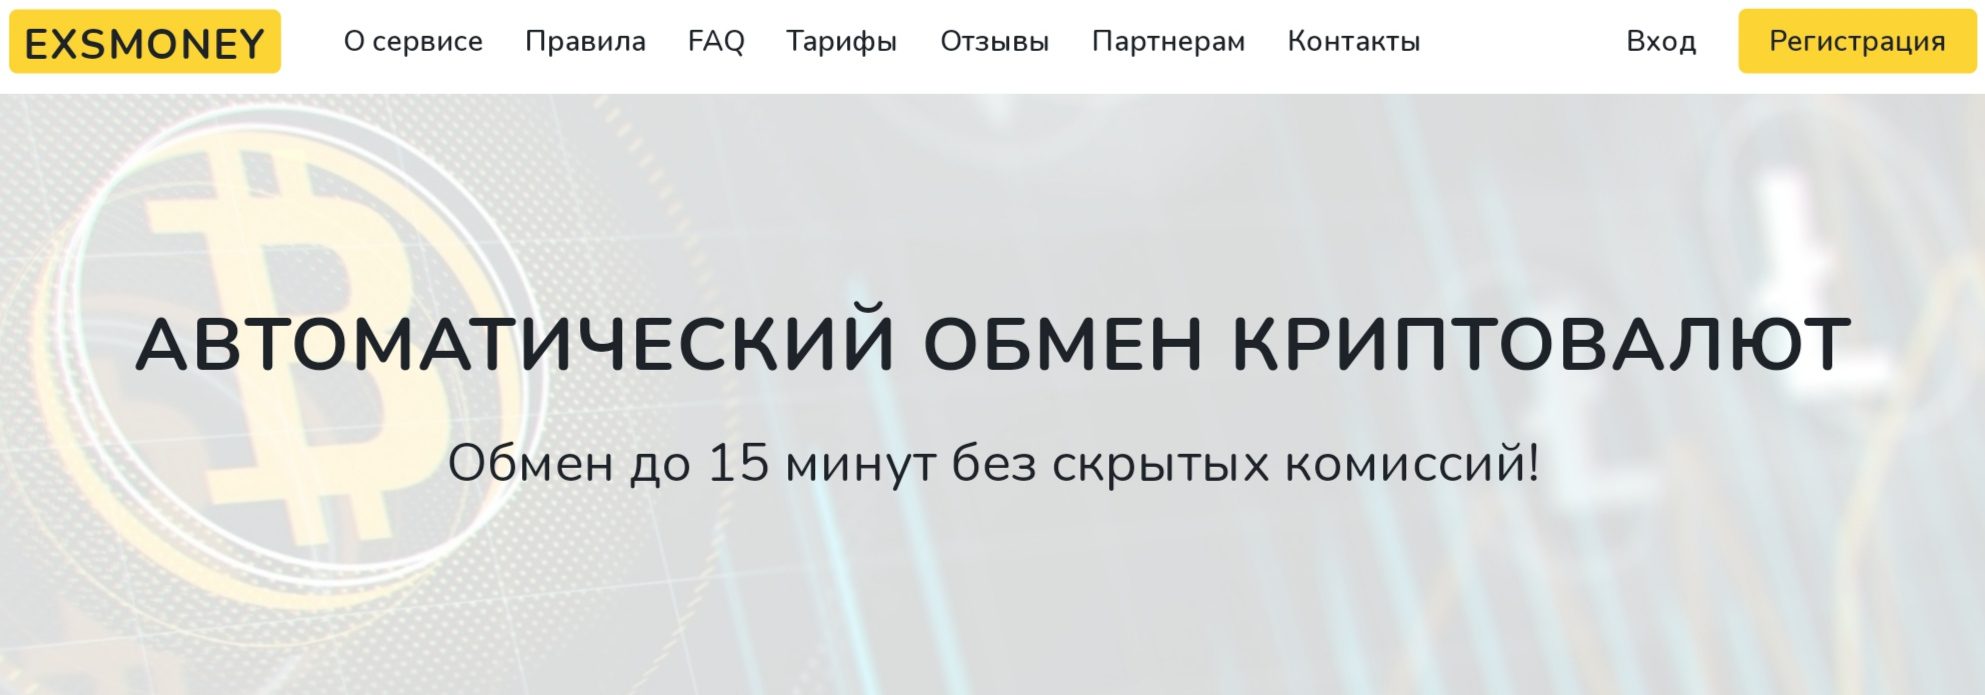 Exsmoney.ru сайт